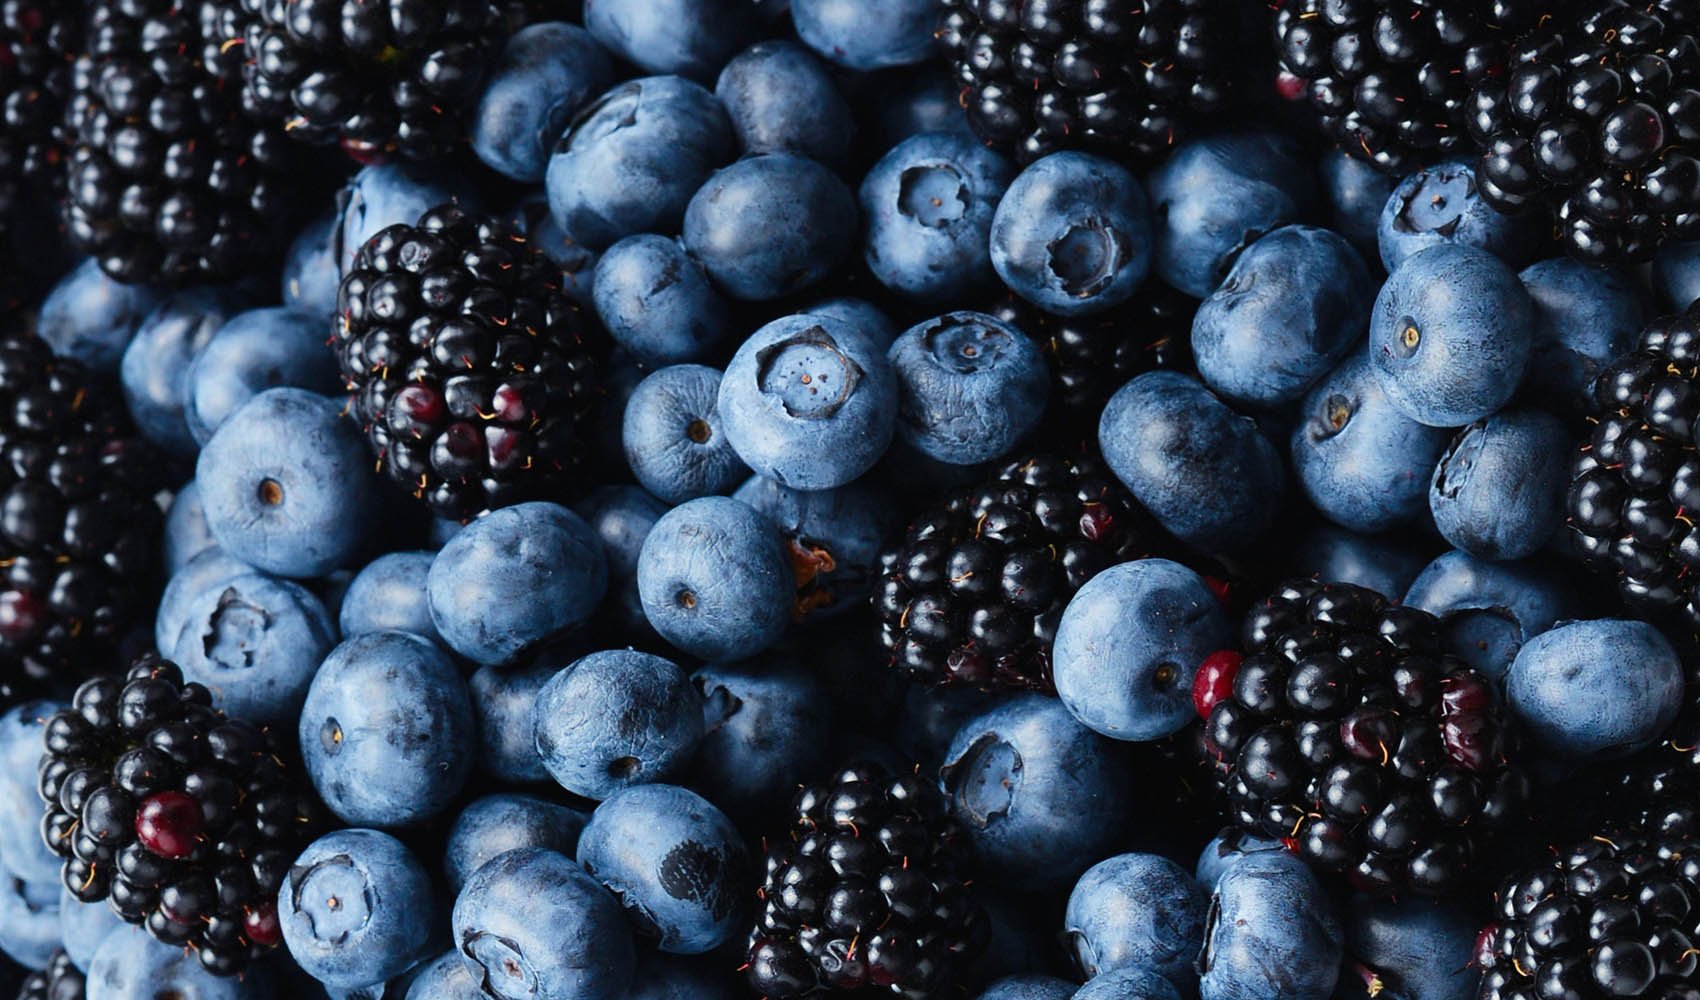 nutritional-comparison-blueberries-vs-blackberries-4